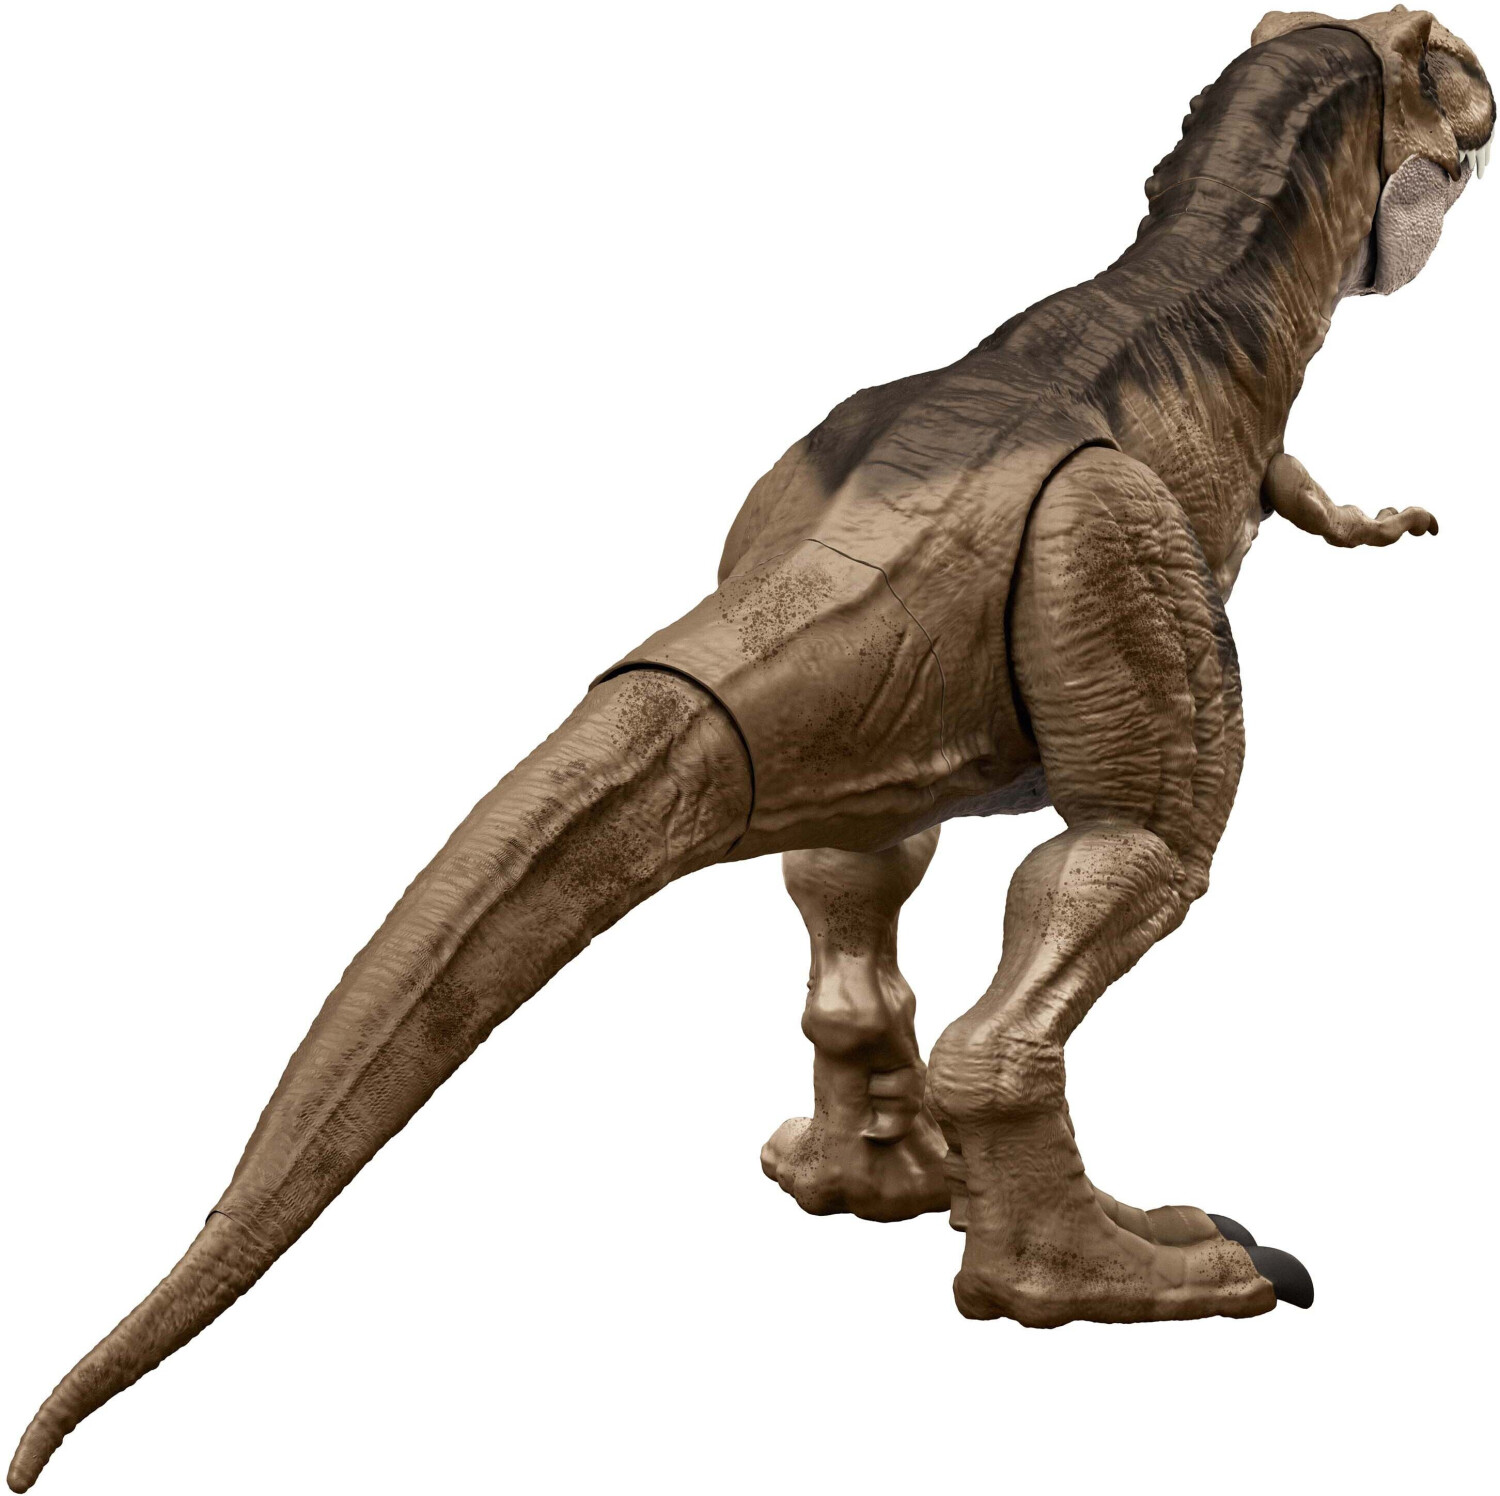 Buy Mattel Jurassic World T-Rex from £57.90 (Today) – Best Deals on